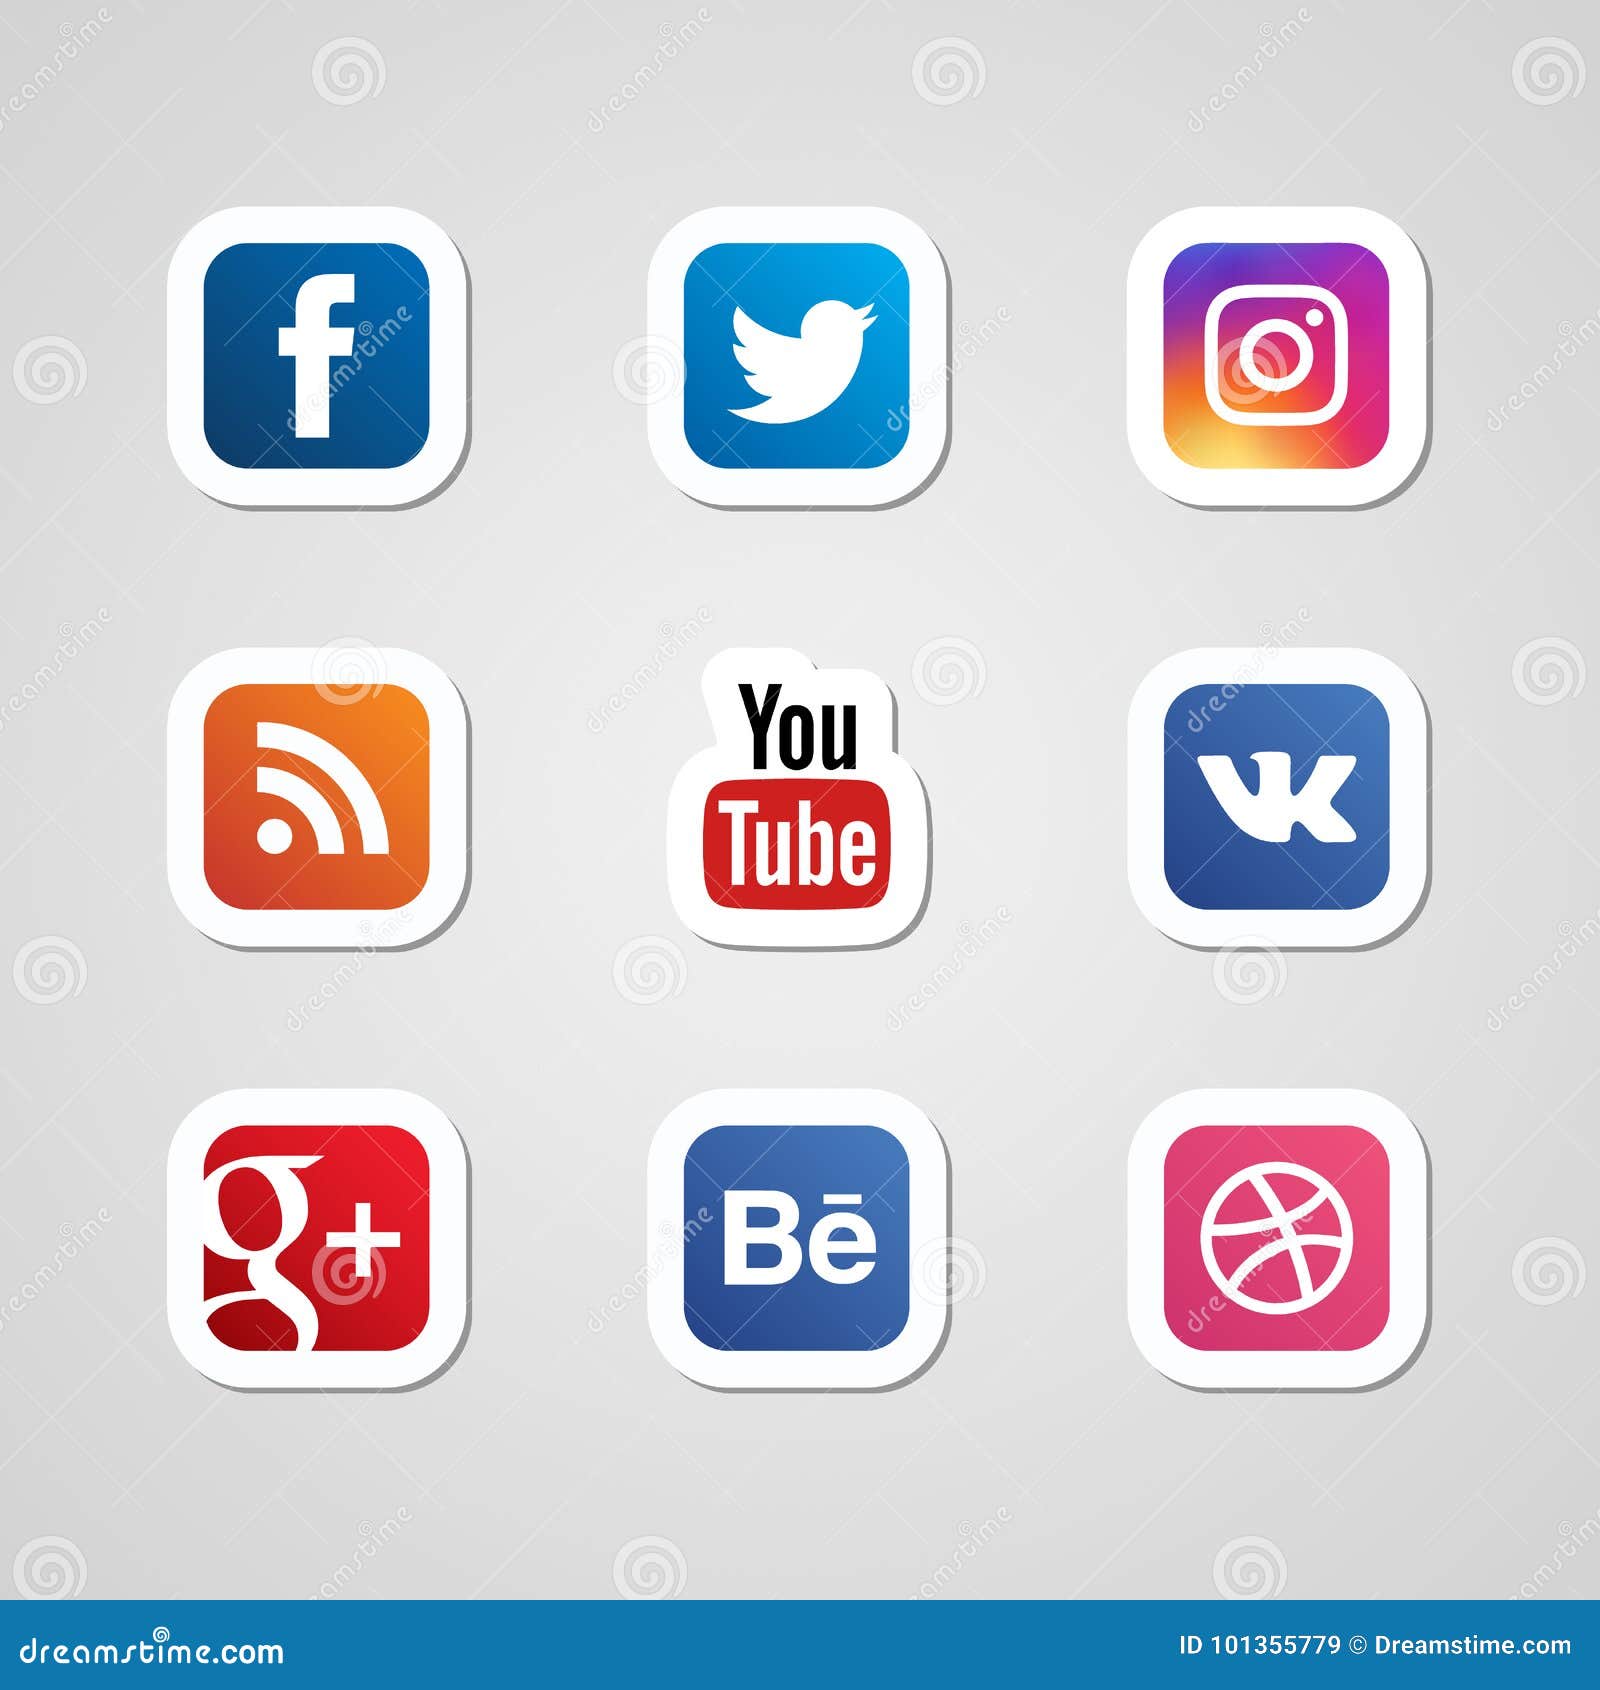 icon stickers social media Instagram planner stickers plan |